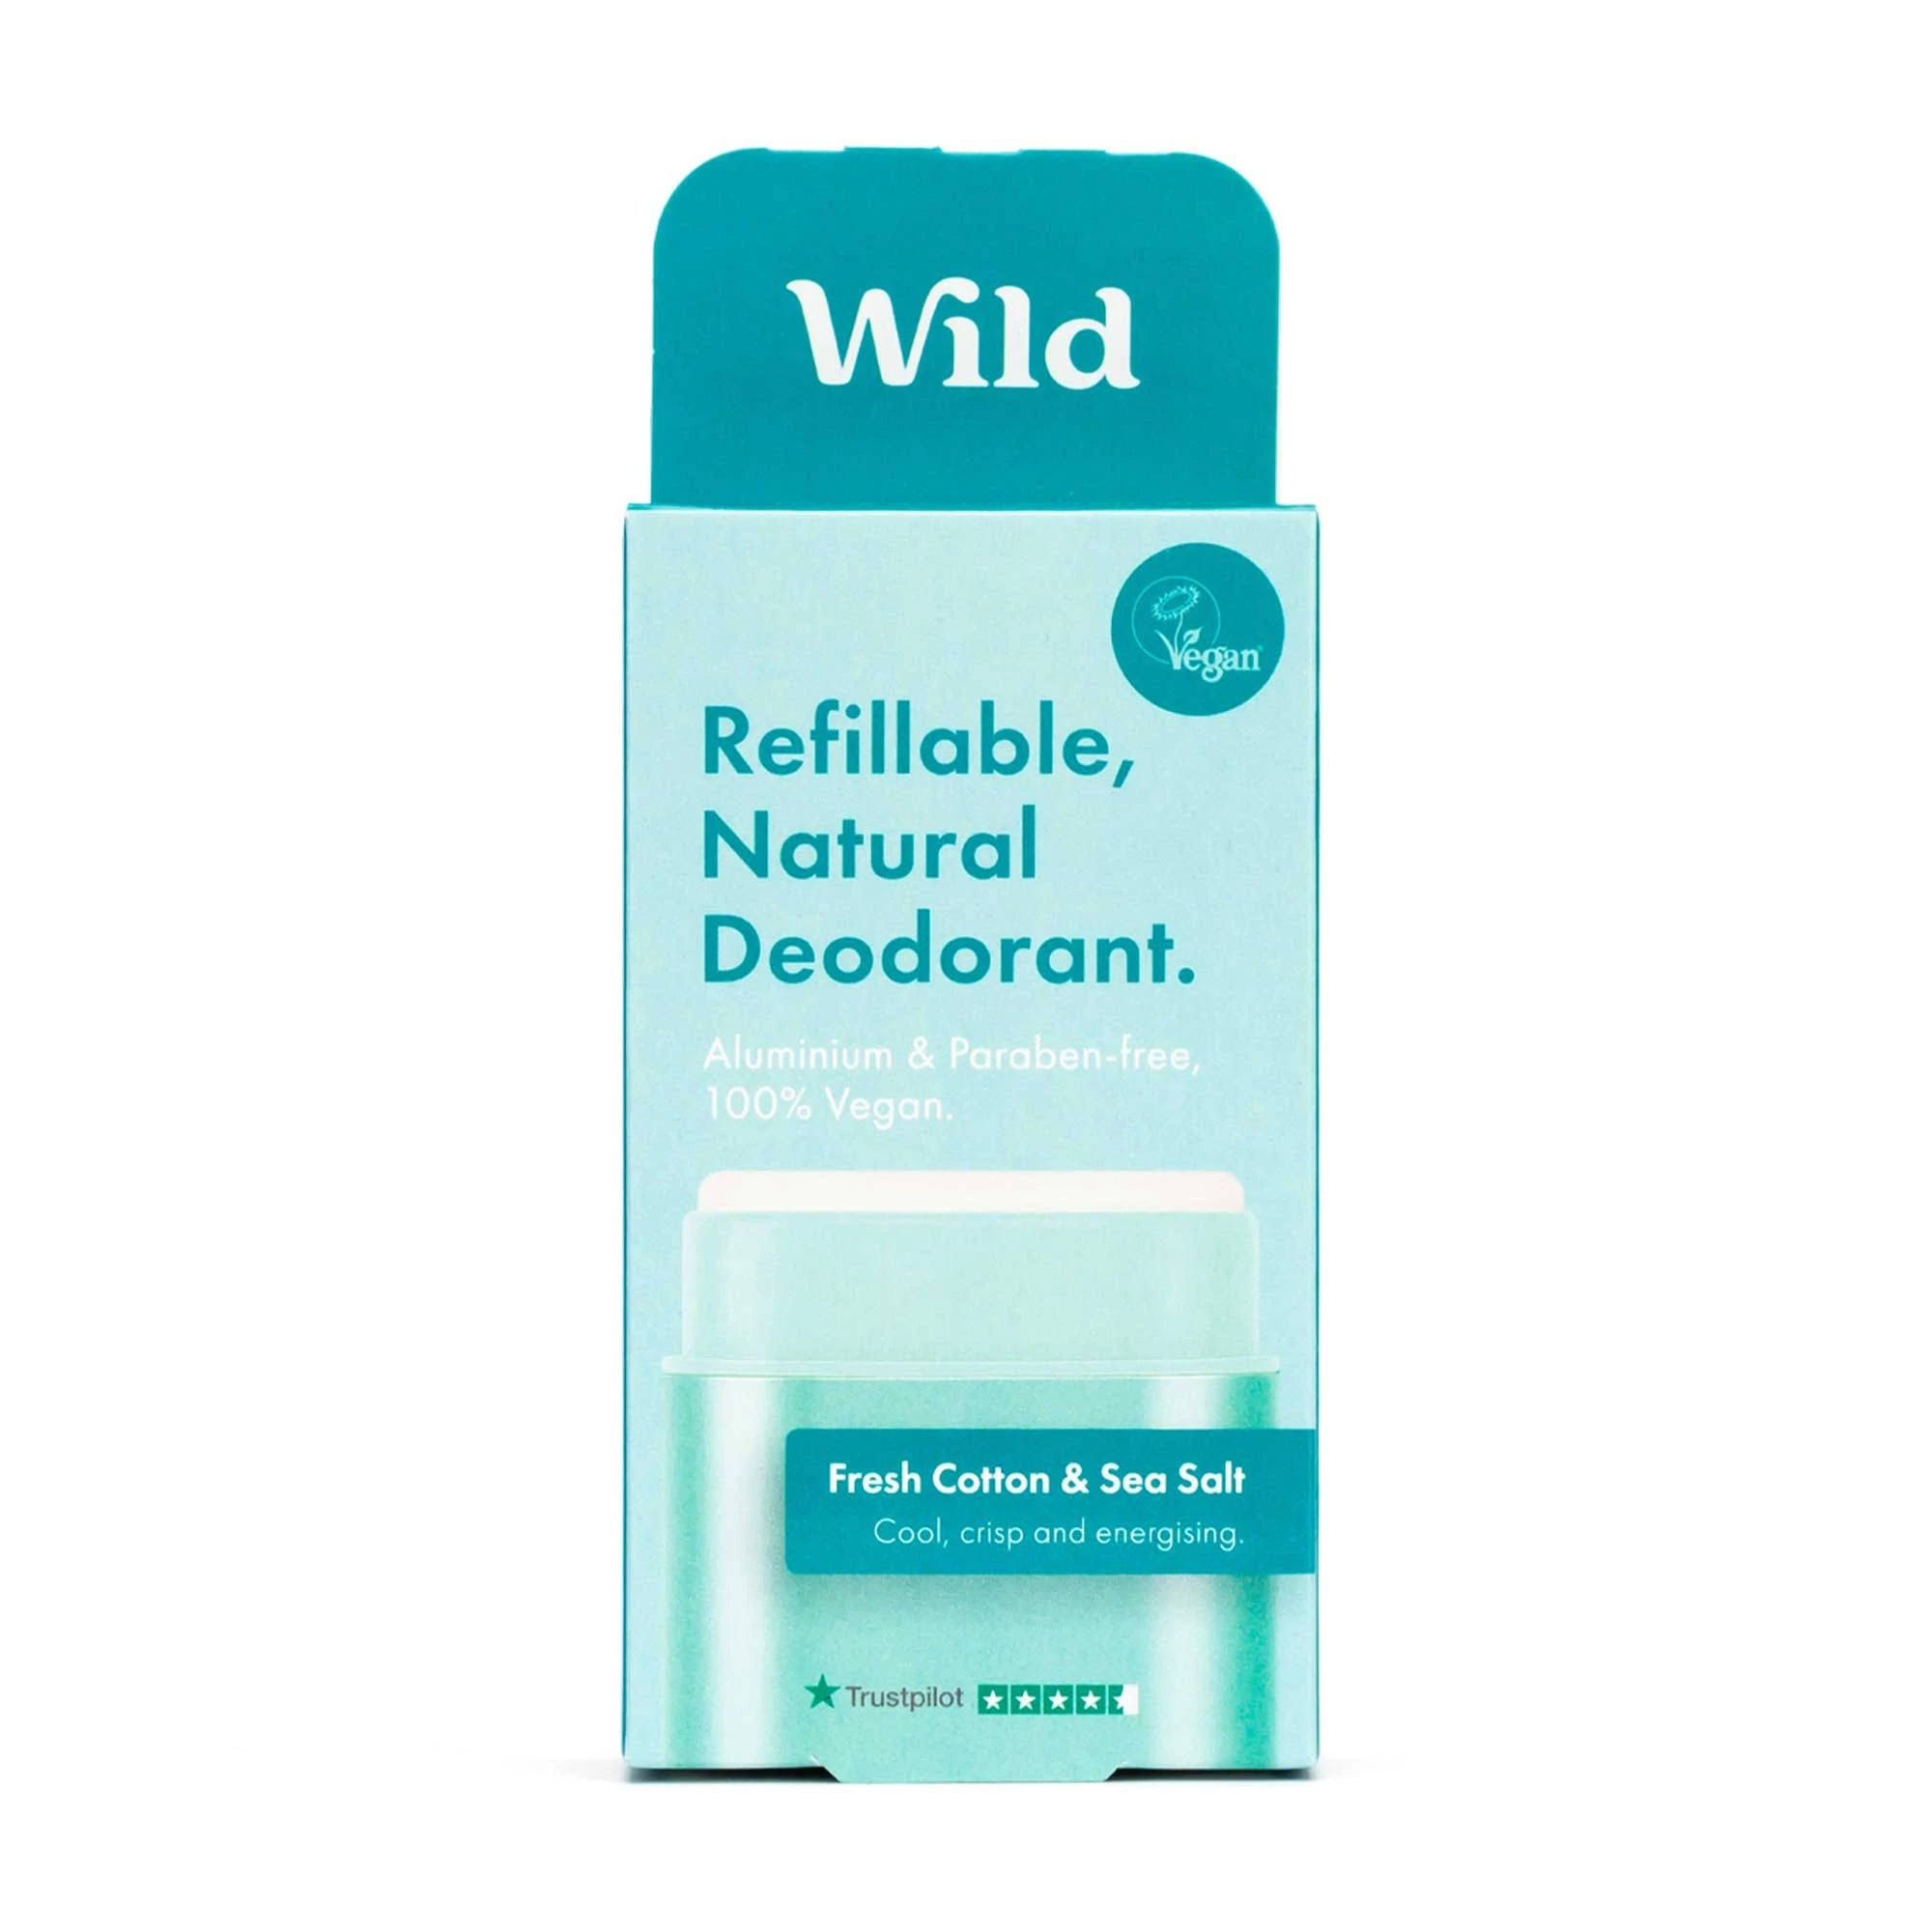 Wild Fresh Cotton & Sea Salt Deodorant & Aqua Case Starter Pack